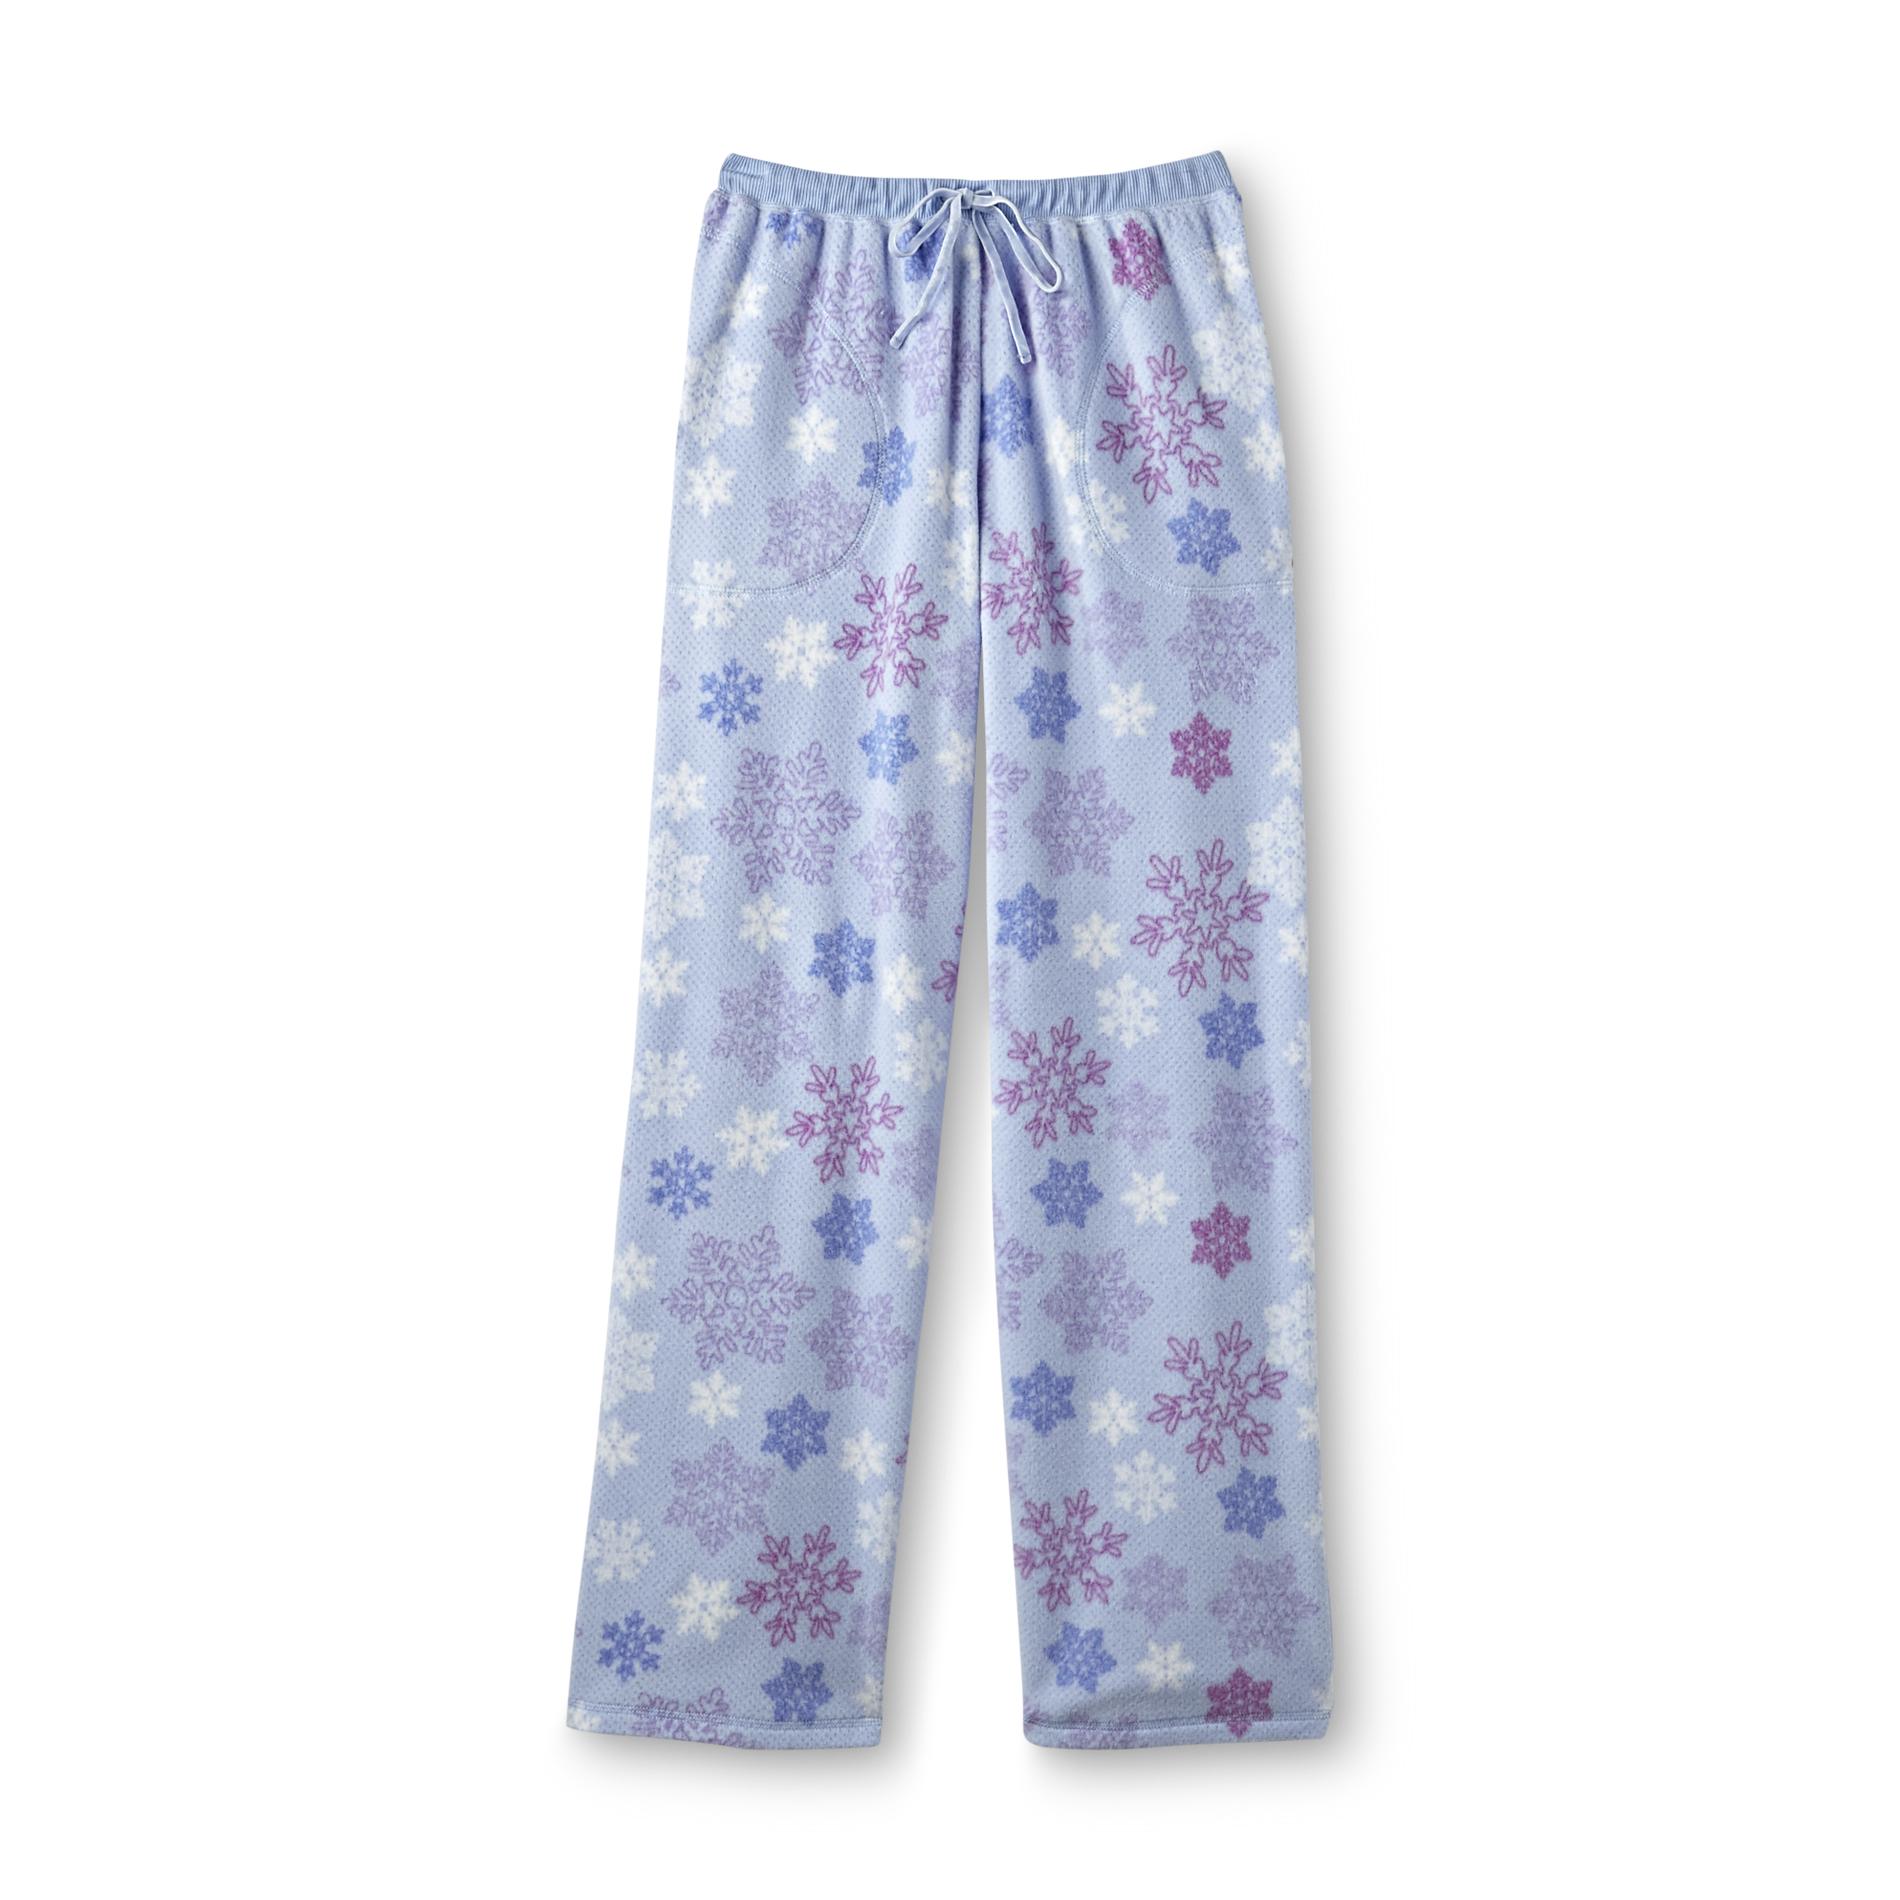 Jaclyn Intimates Women's Super Span Fleece Pajama Pants - Snowflakes